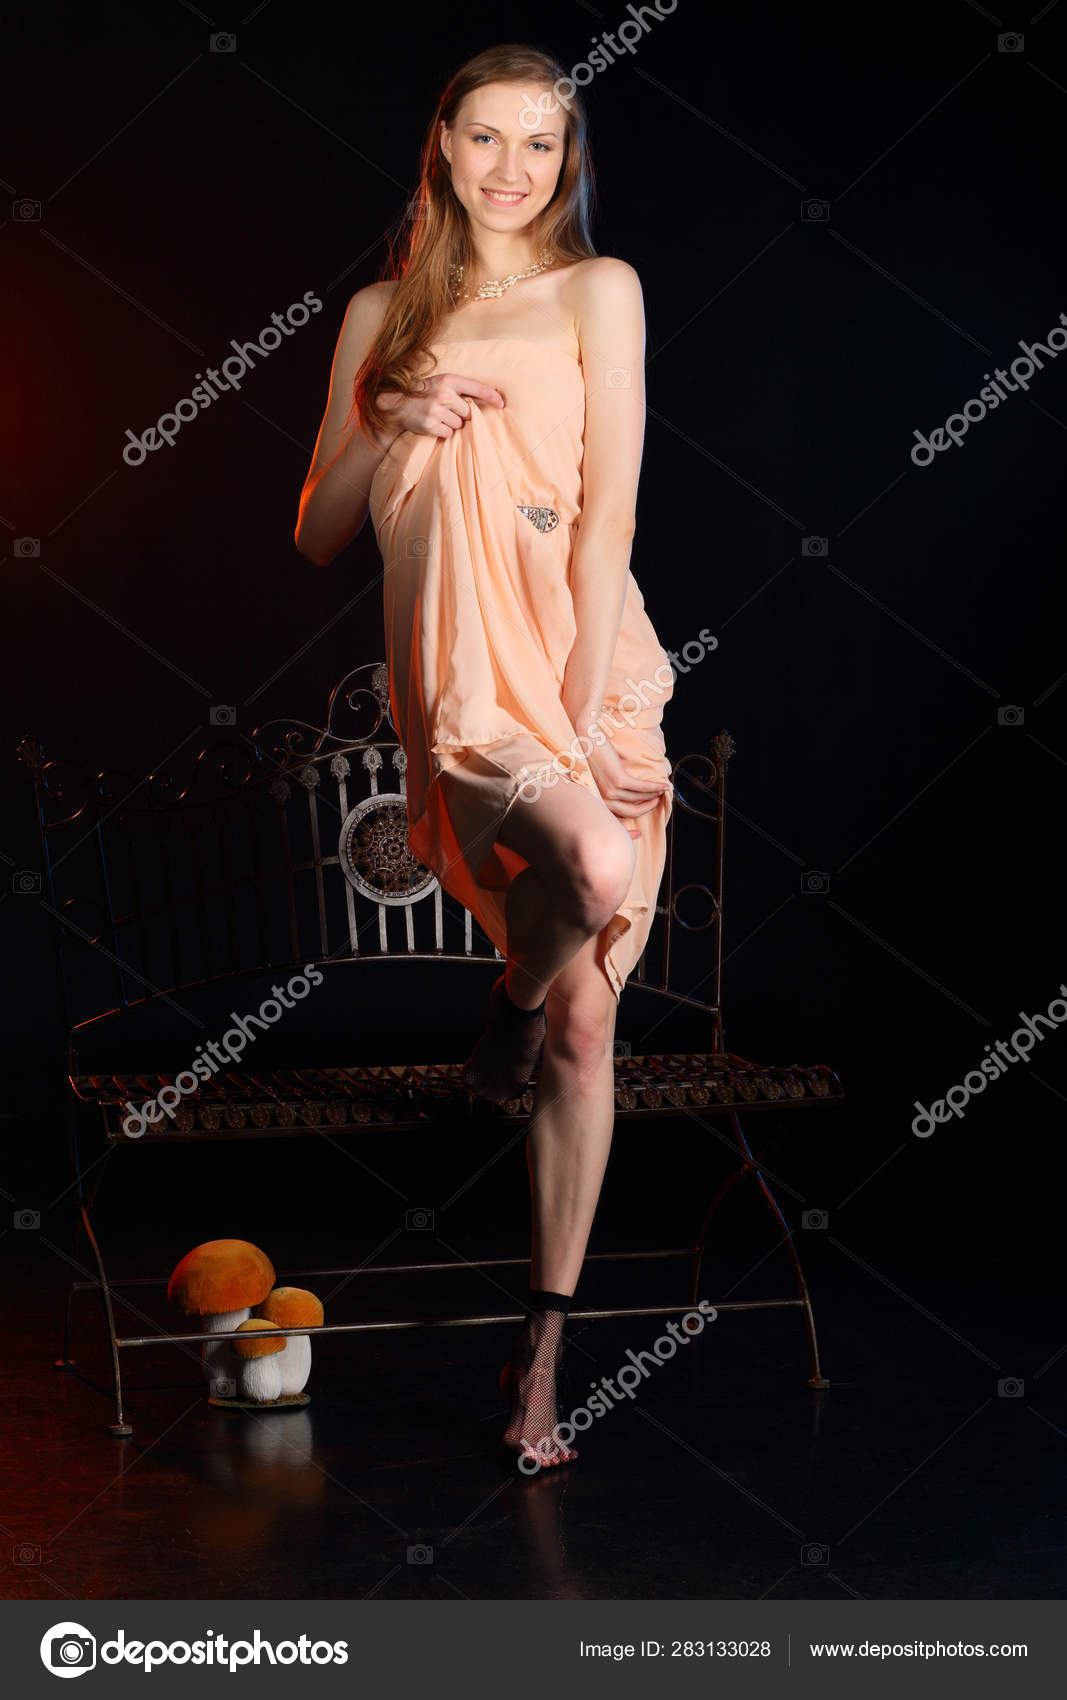 https://st4.depositphotos.com/1799830/28313/i/1600/depositphotos_283133[001-999]-stock-photo-studio-portrait-beauty-sexual-woman.jpg